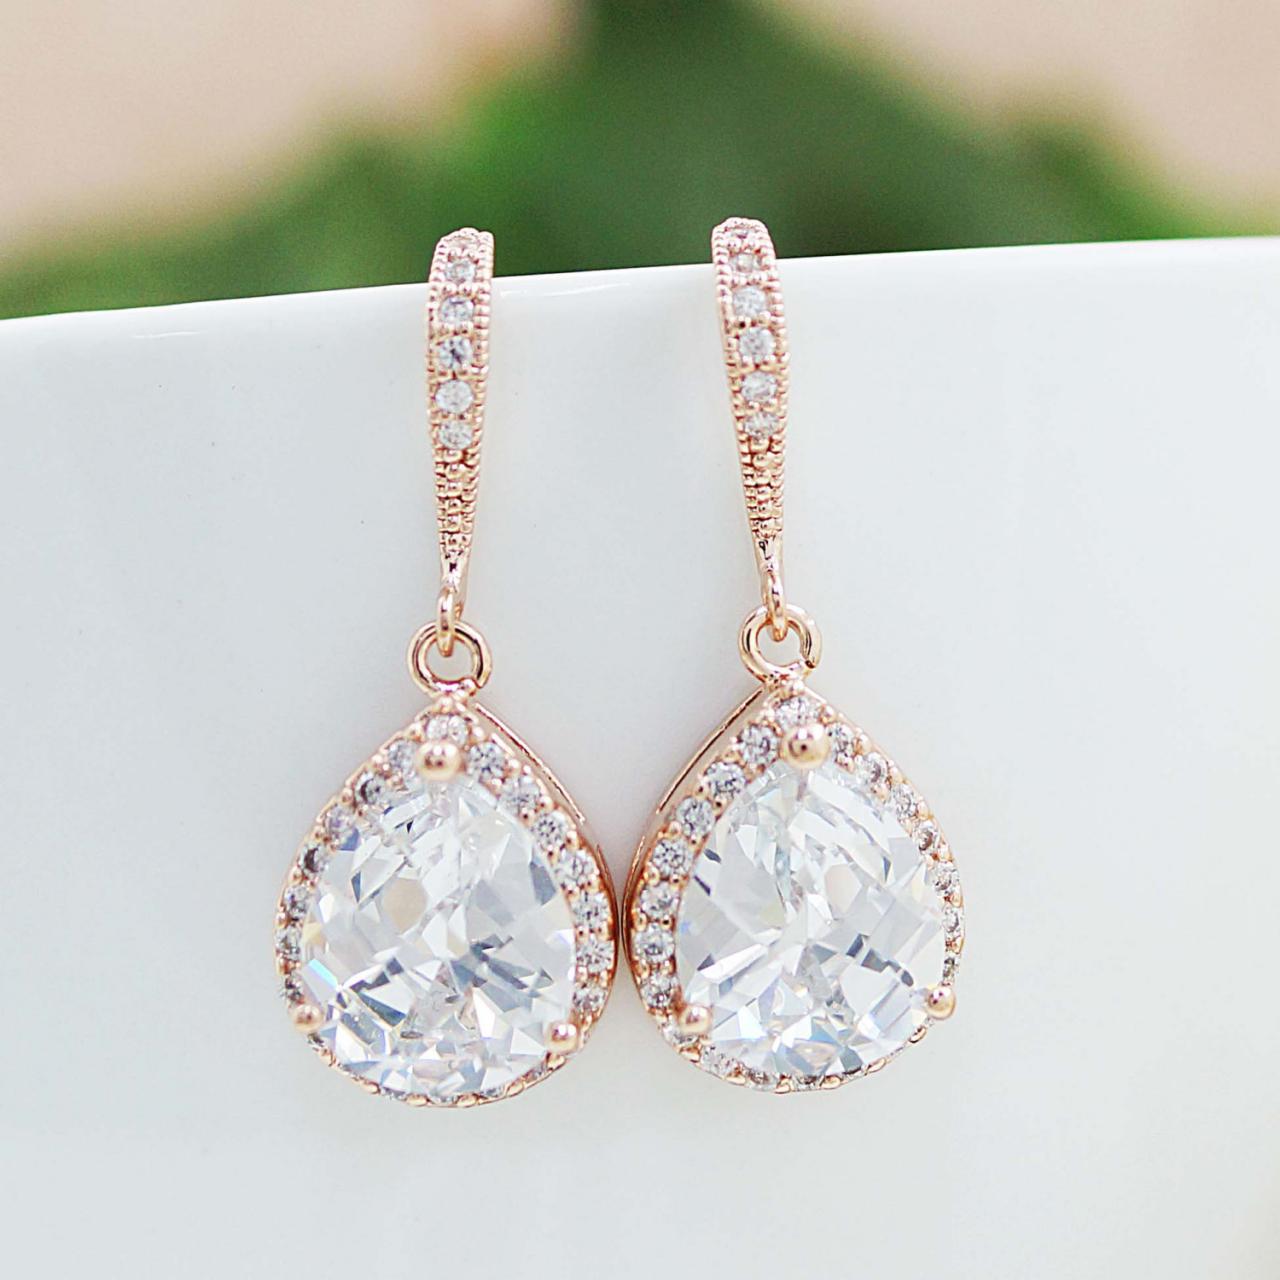 Bridal Earrings Bridesmaid Gift Wedding Earrings Bridal Jewelry Lux Rose Gold Clear White Cubic Zirconia Crystal Tear Drop Wedding Earrings